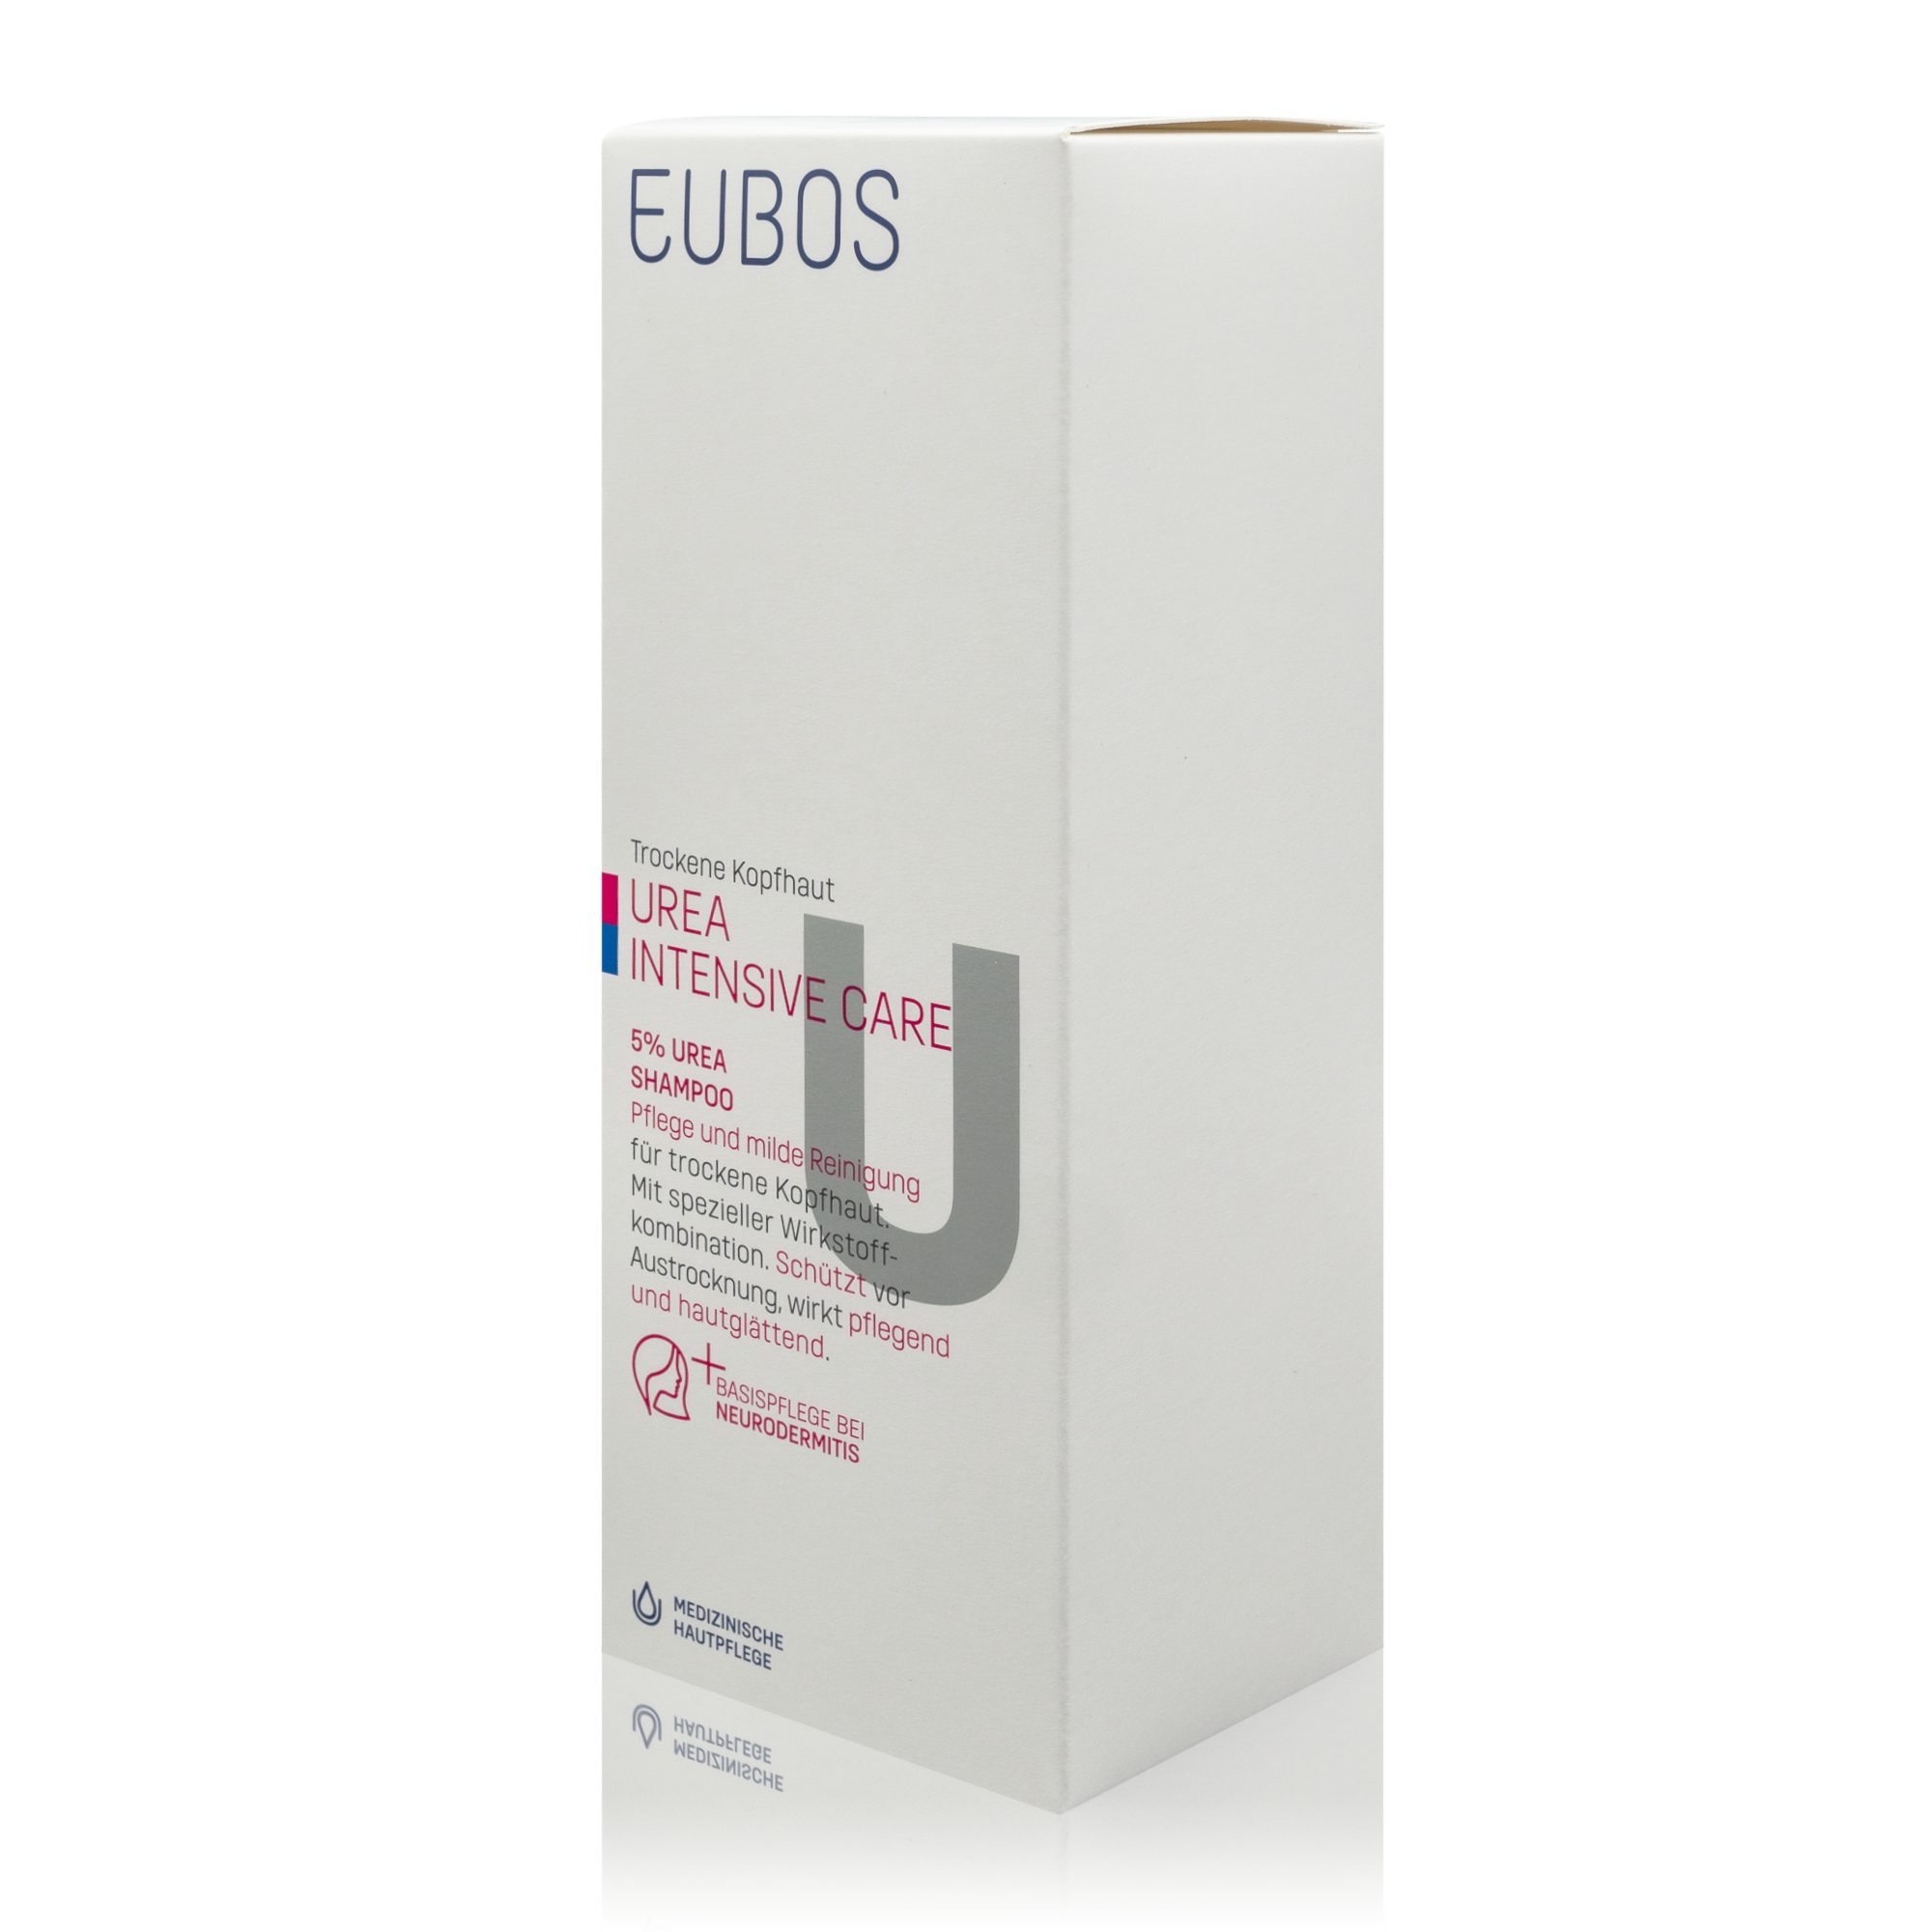 Dr.Hobein (Nachf.) GmbH EUBOS Haarshampoo Eubos Trockene Kopfhaut Urea Intensive Care - 5% Urea Shampoo (200ml)